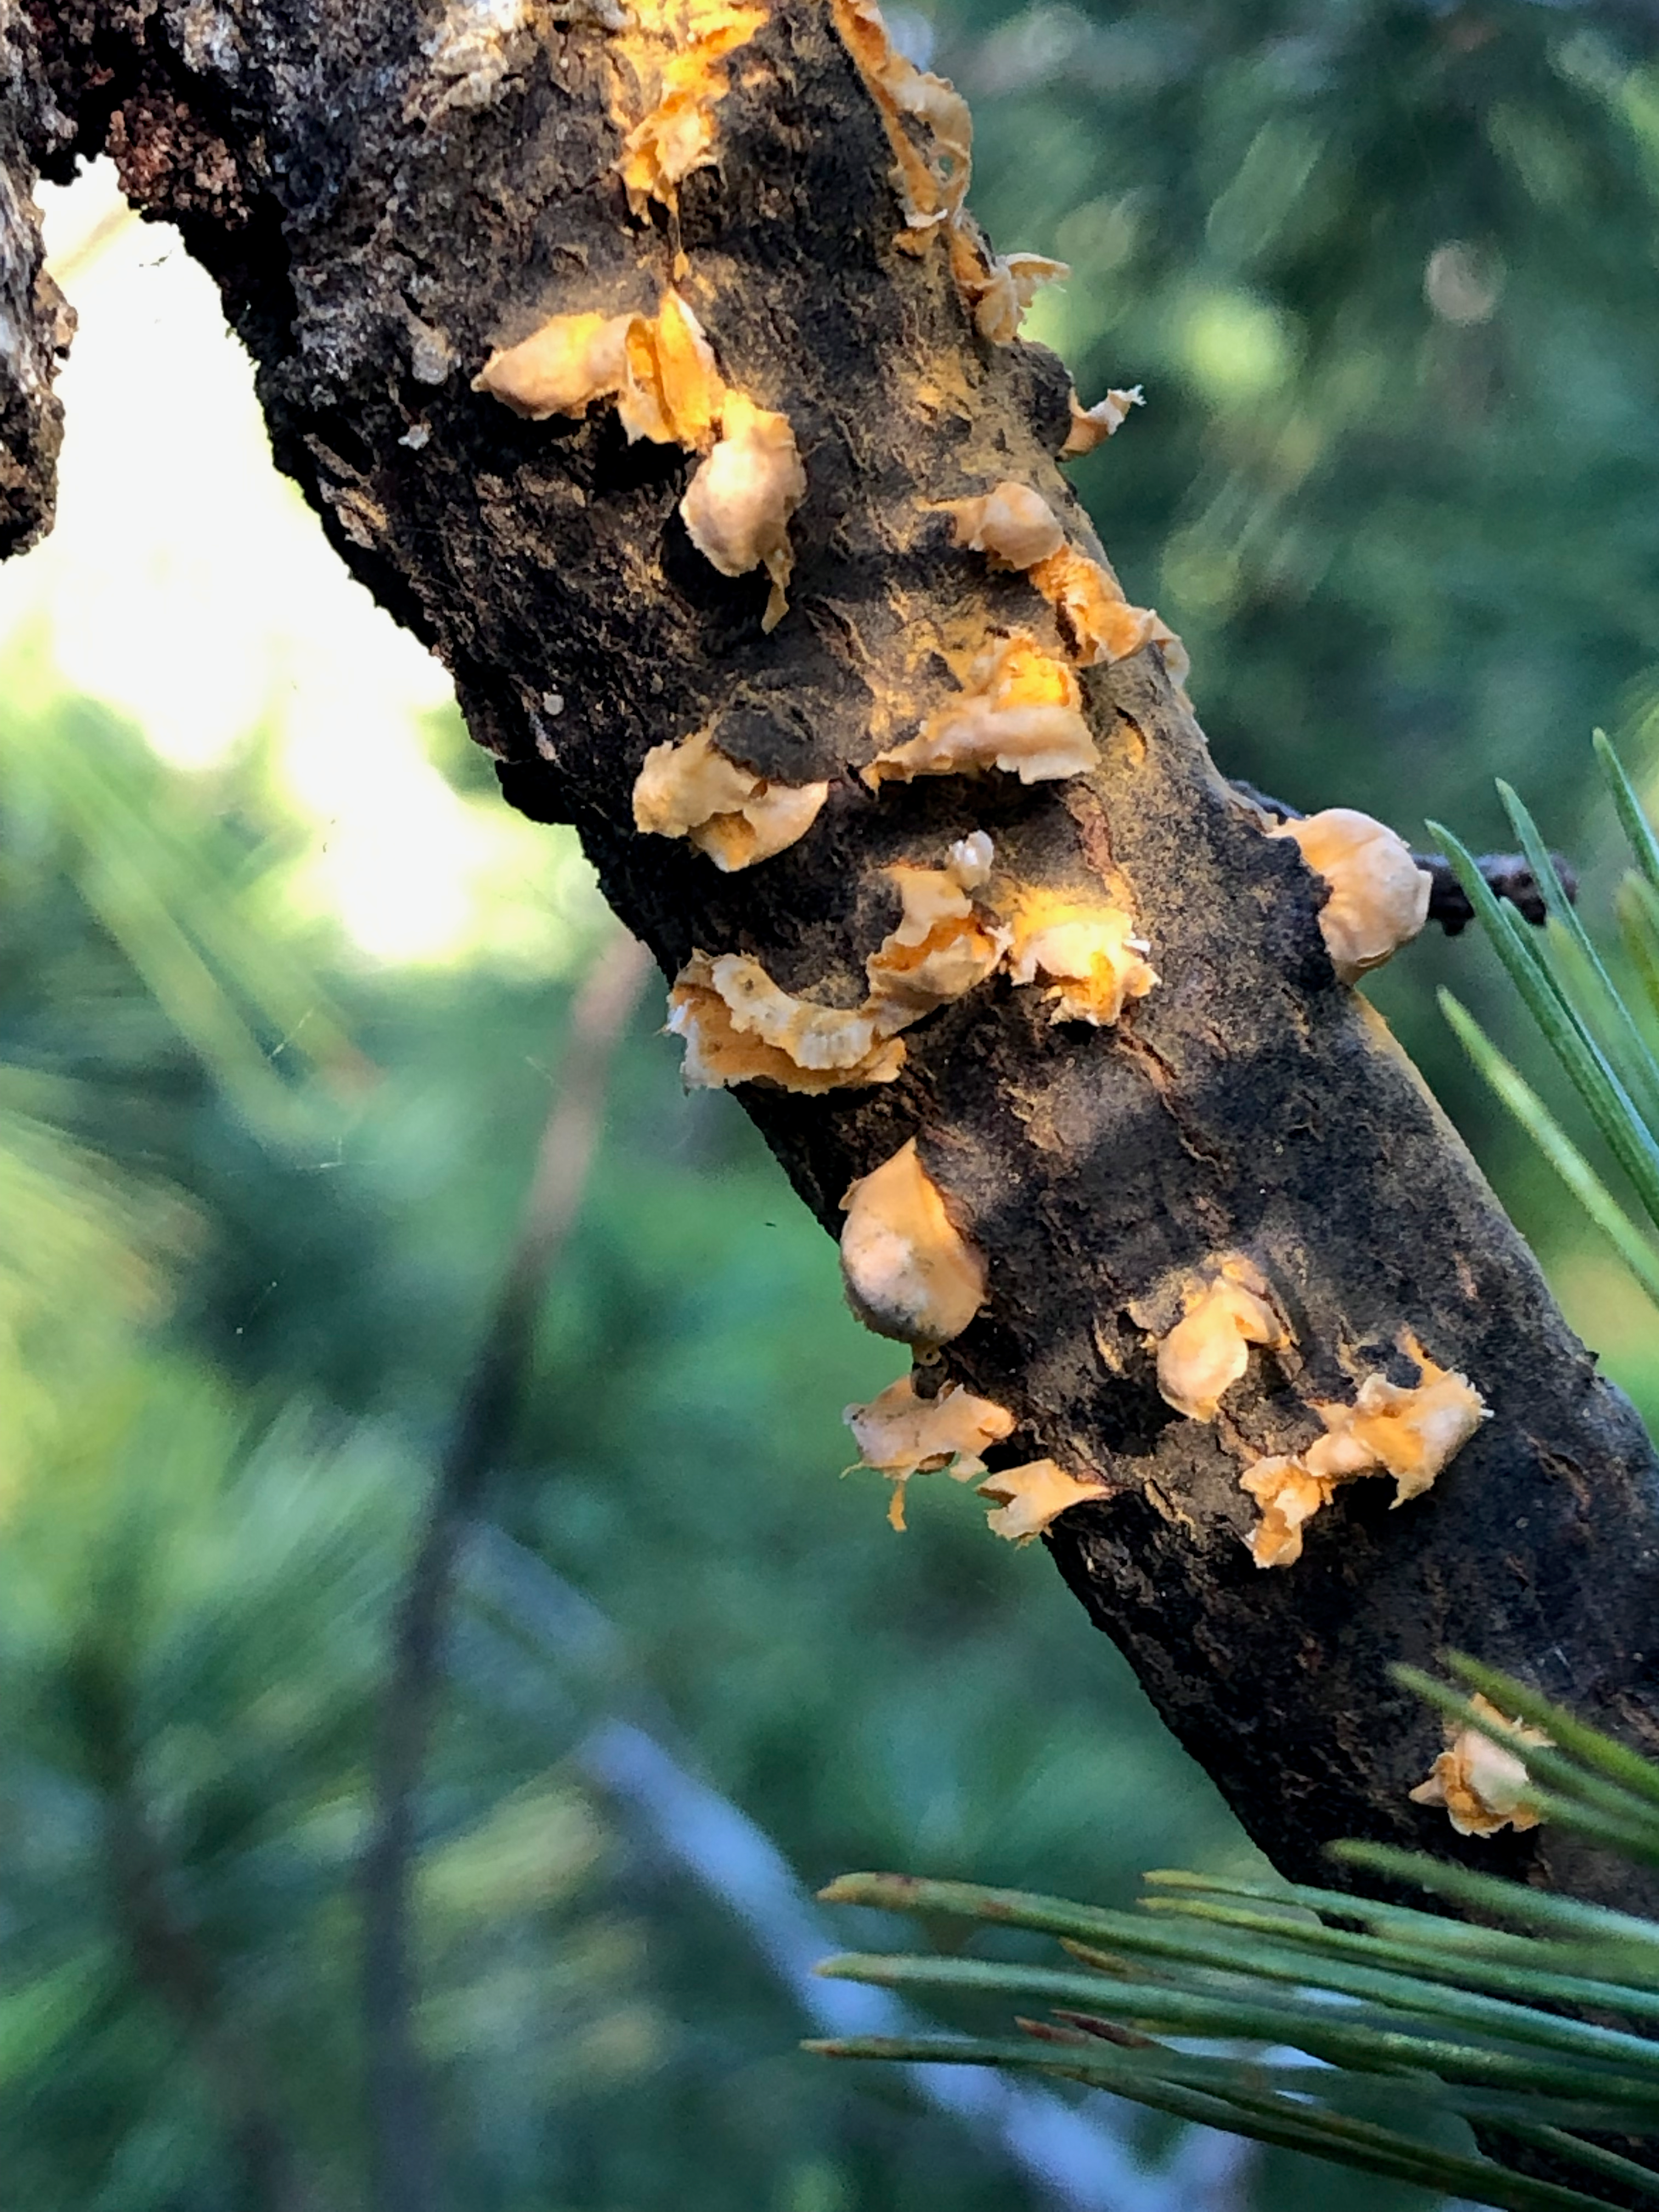 Symptoms of pine blister rust. 